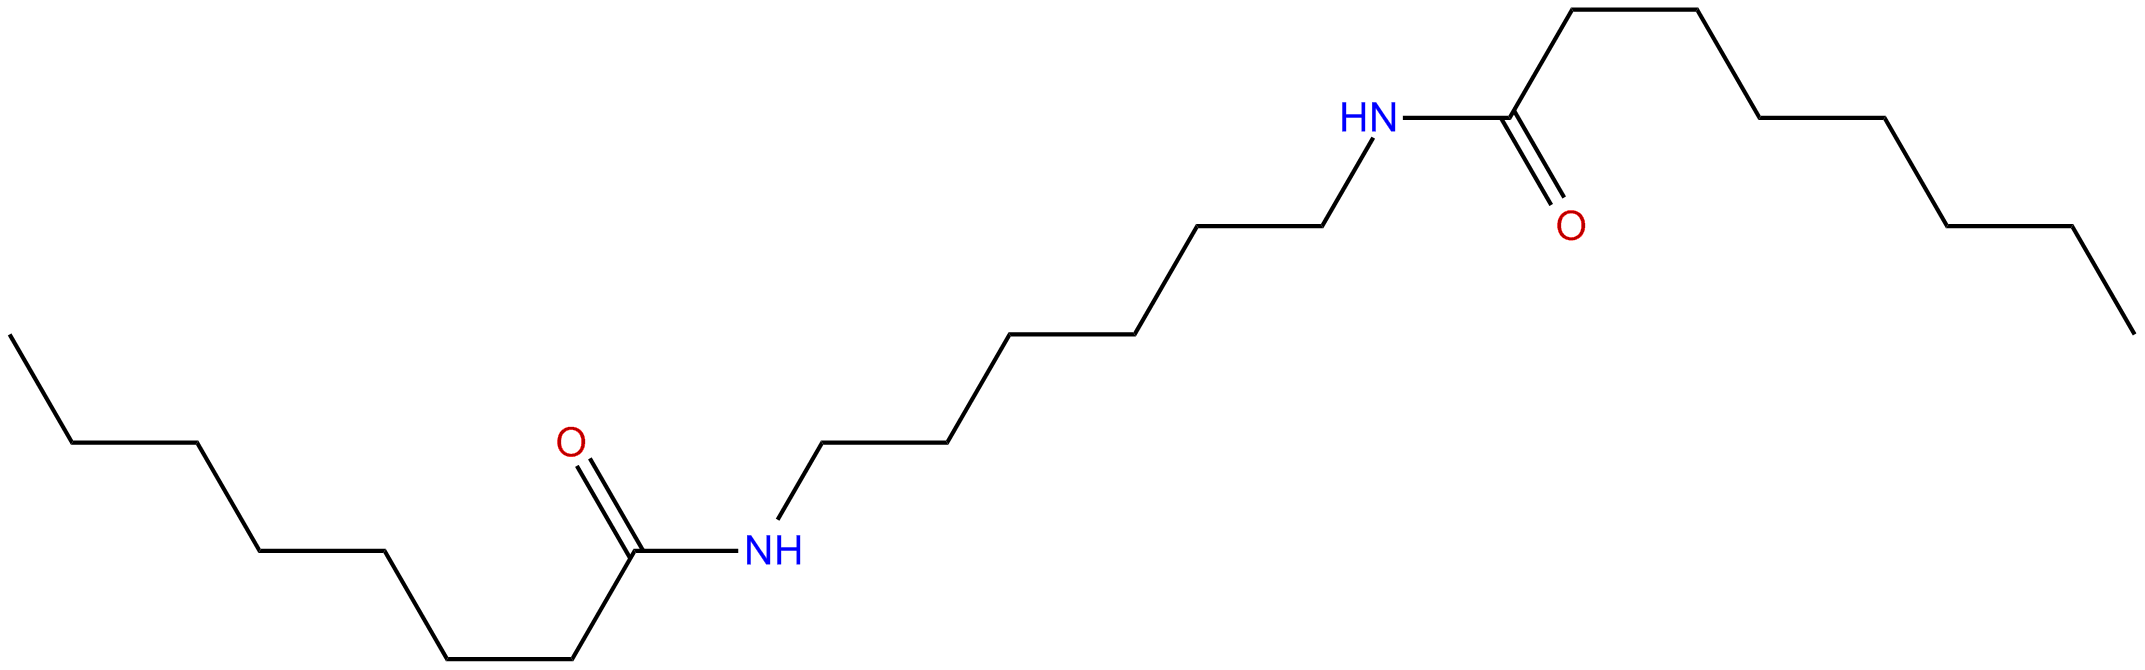 Image of N,N'-1,6-hexandiylbisoctanamide